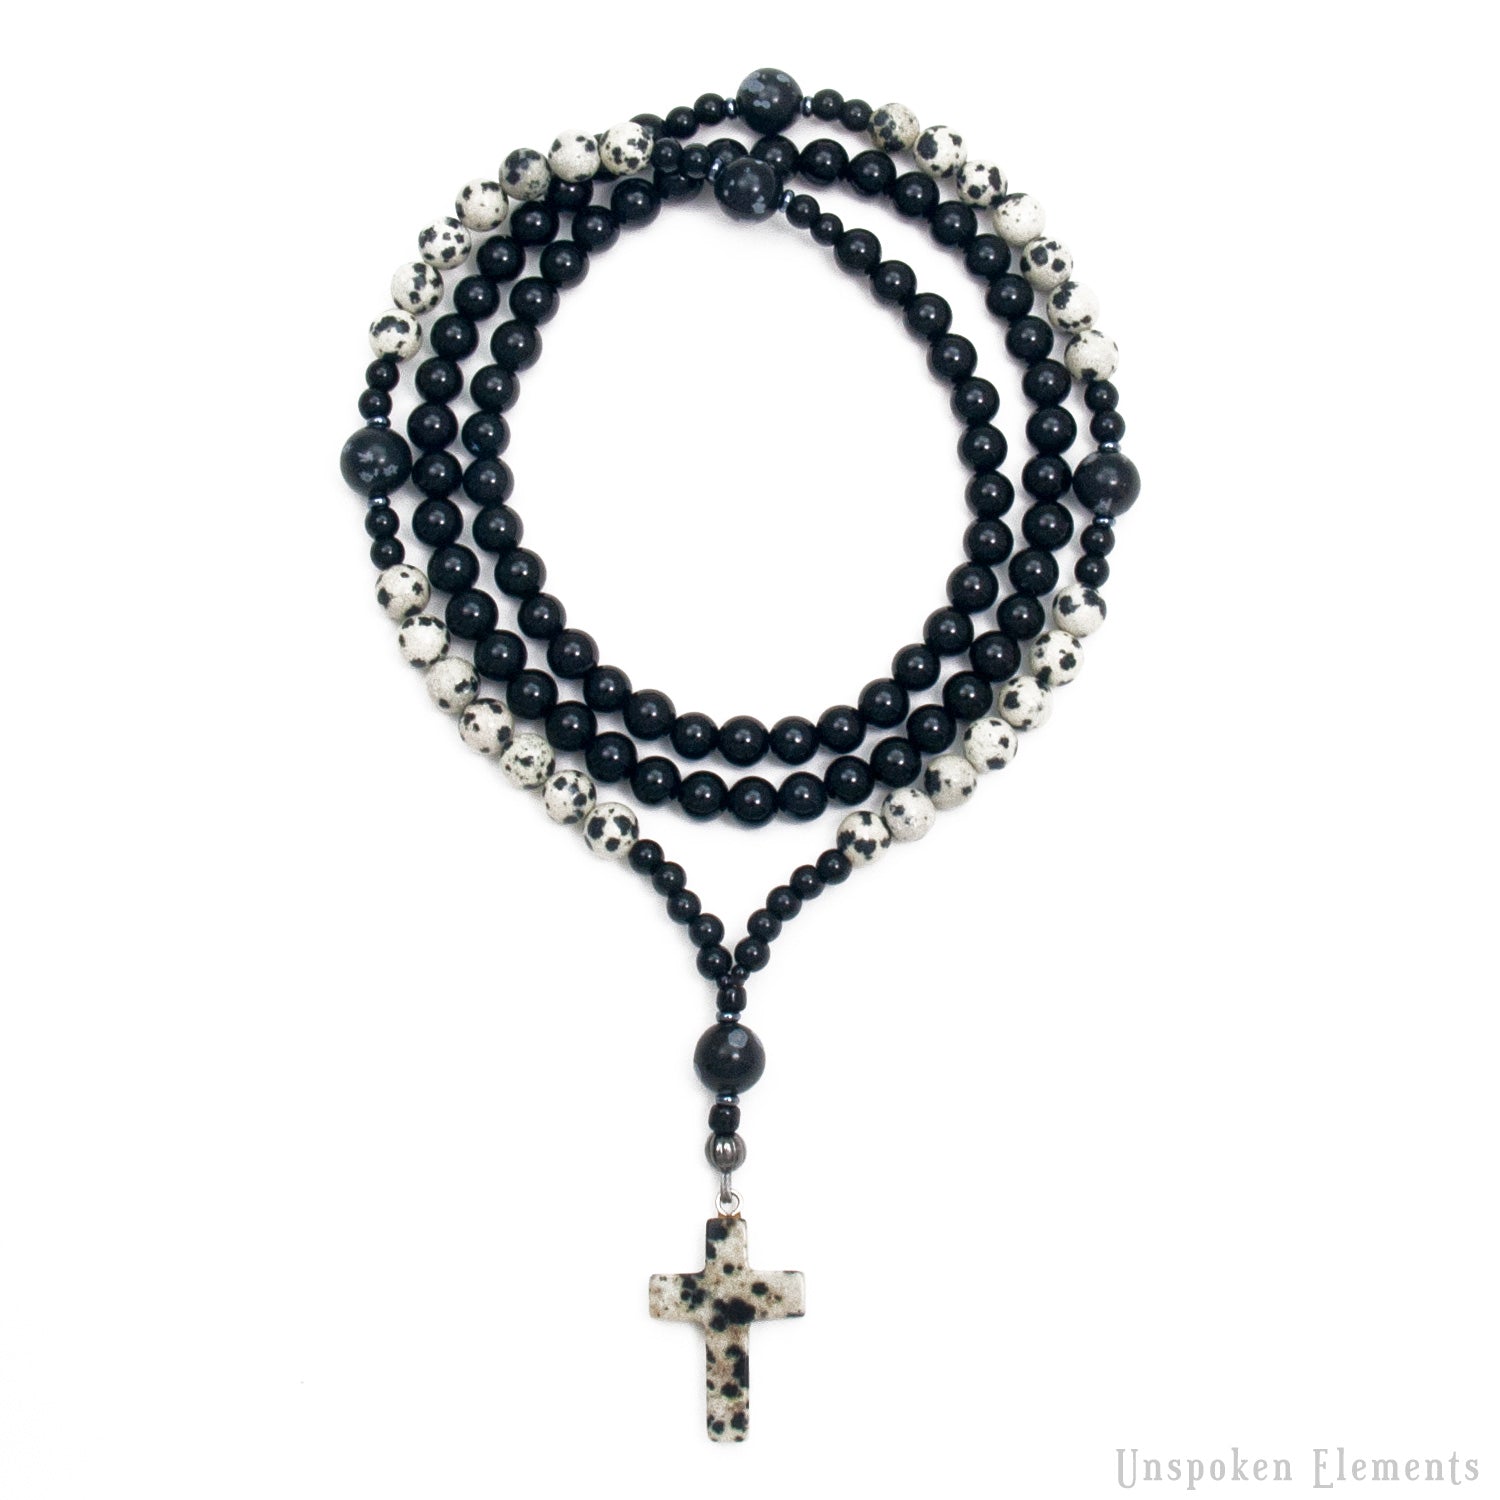 Ask & Believe Rosary Necklace - 100 Prayer Beads - Unspoken Elements